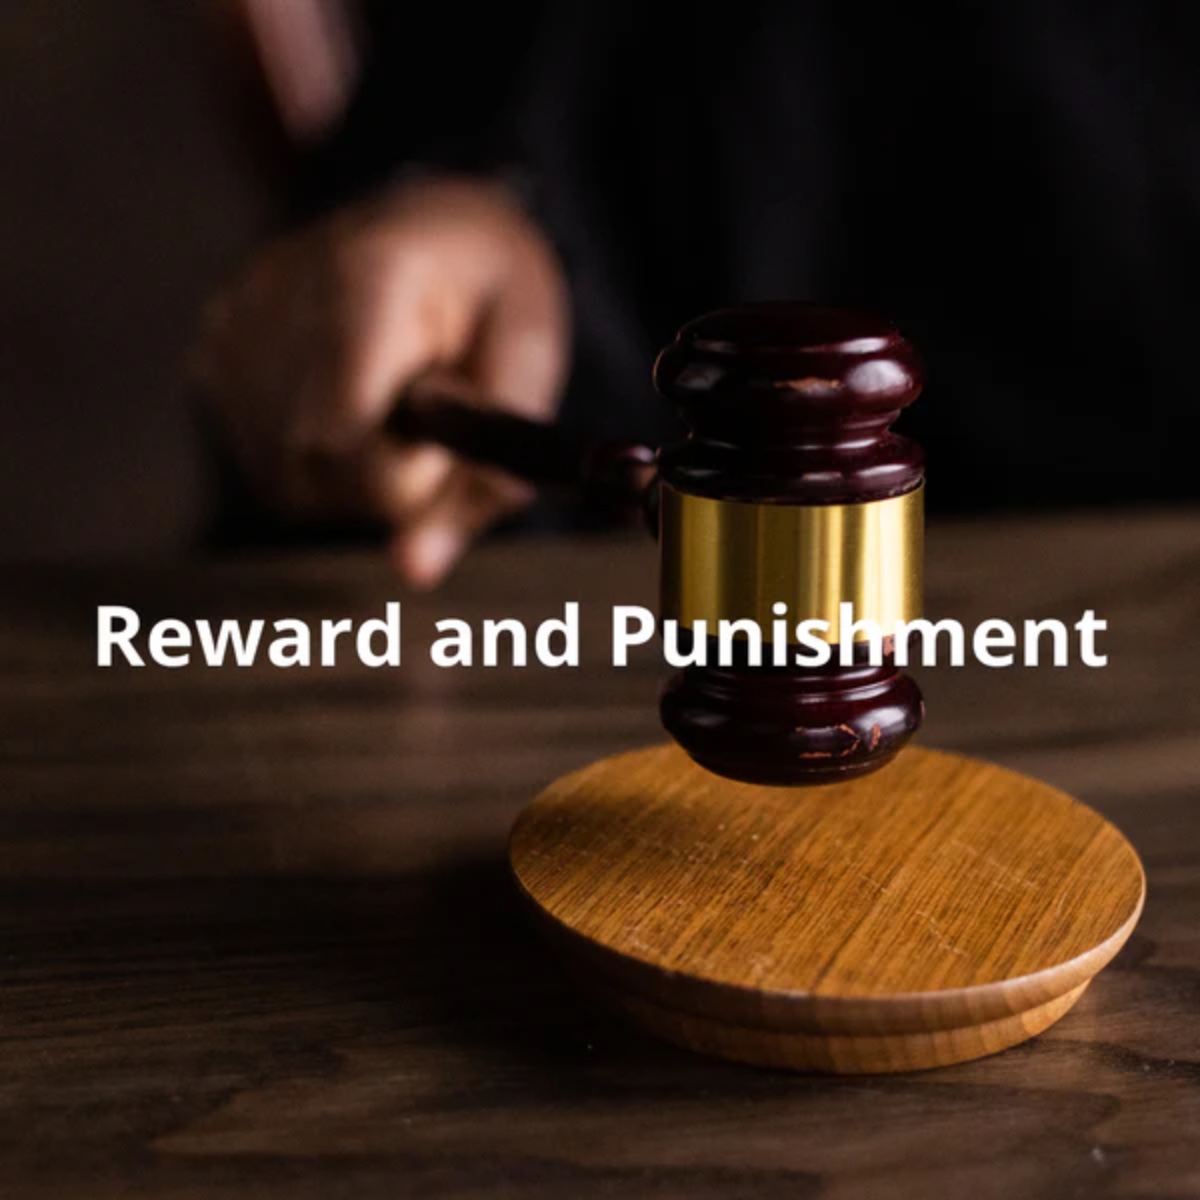 DDLG Punishments vs. Rewards